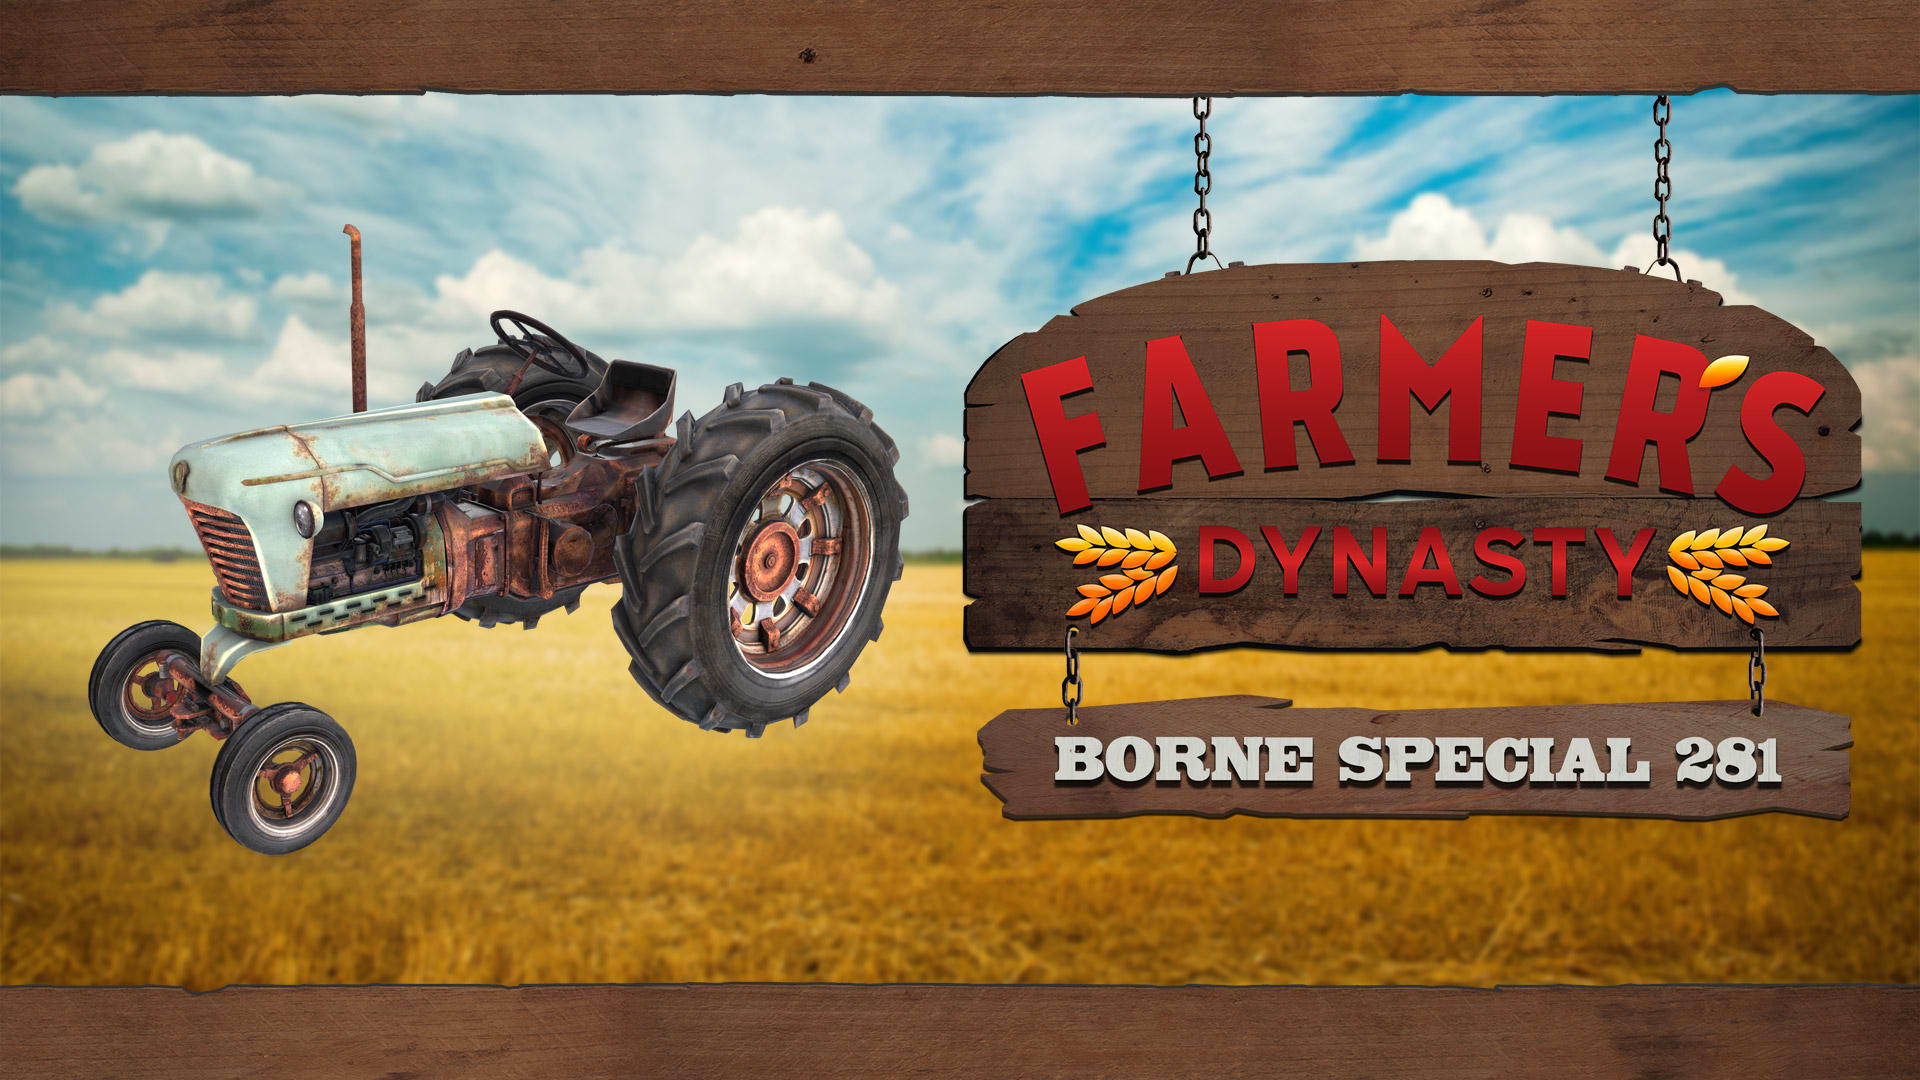 Farmer's Dynasty Borne Special 281